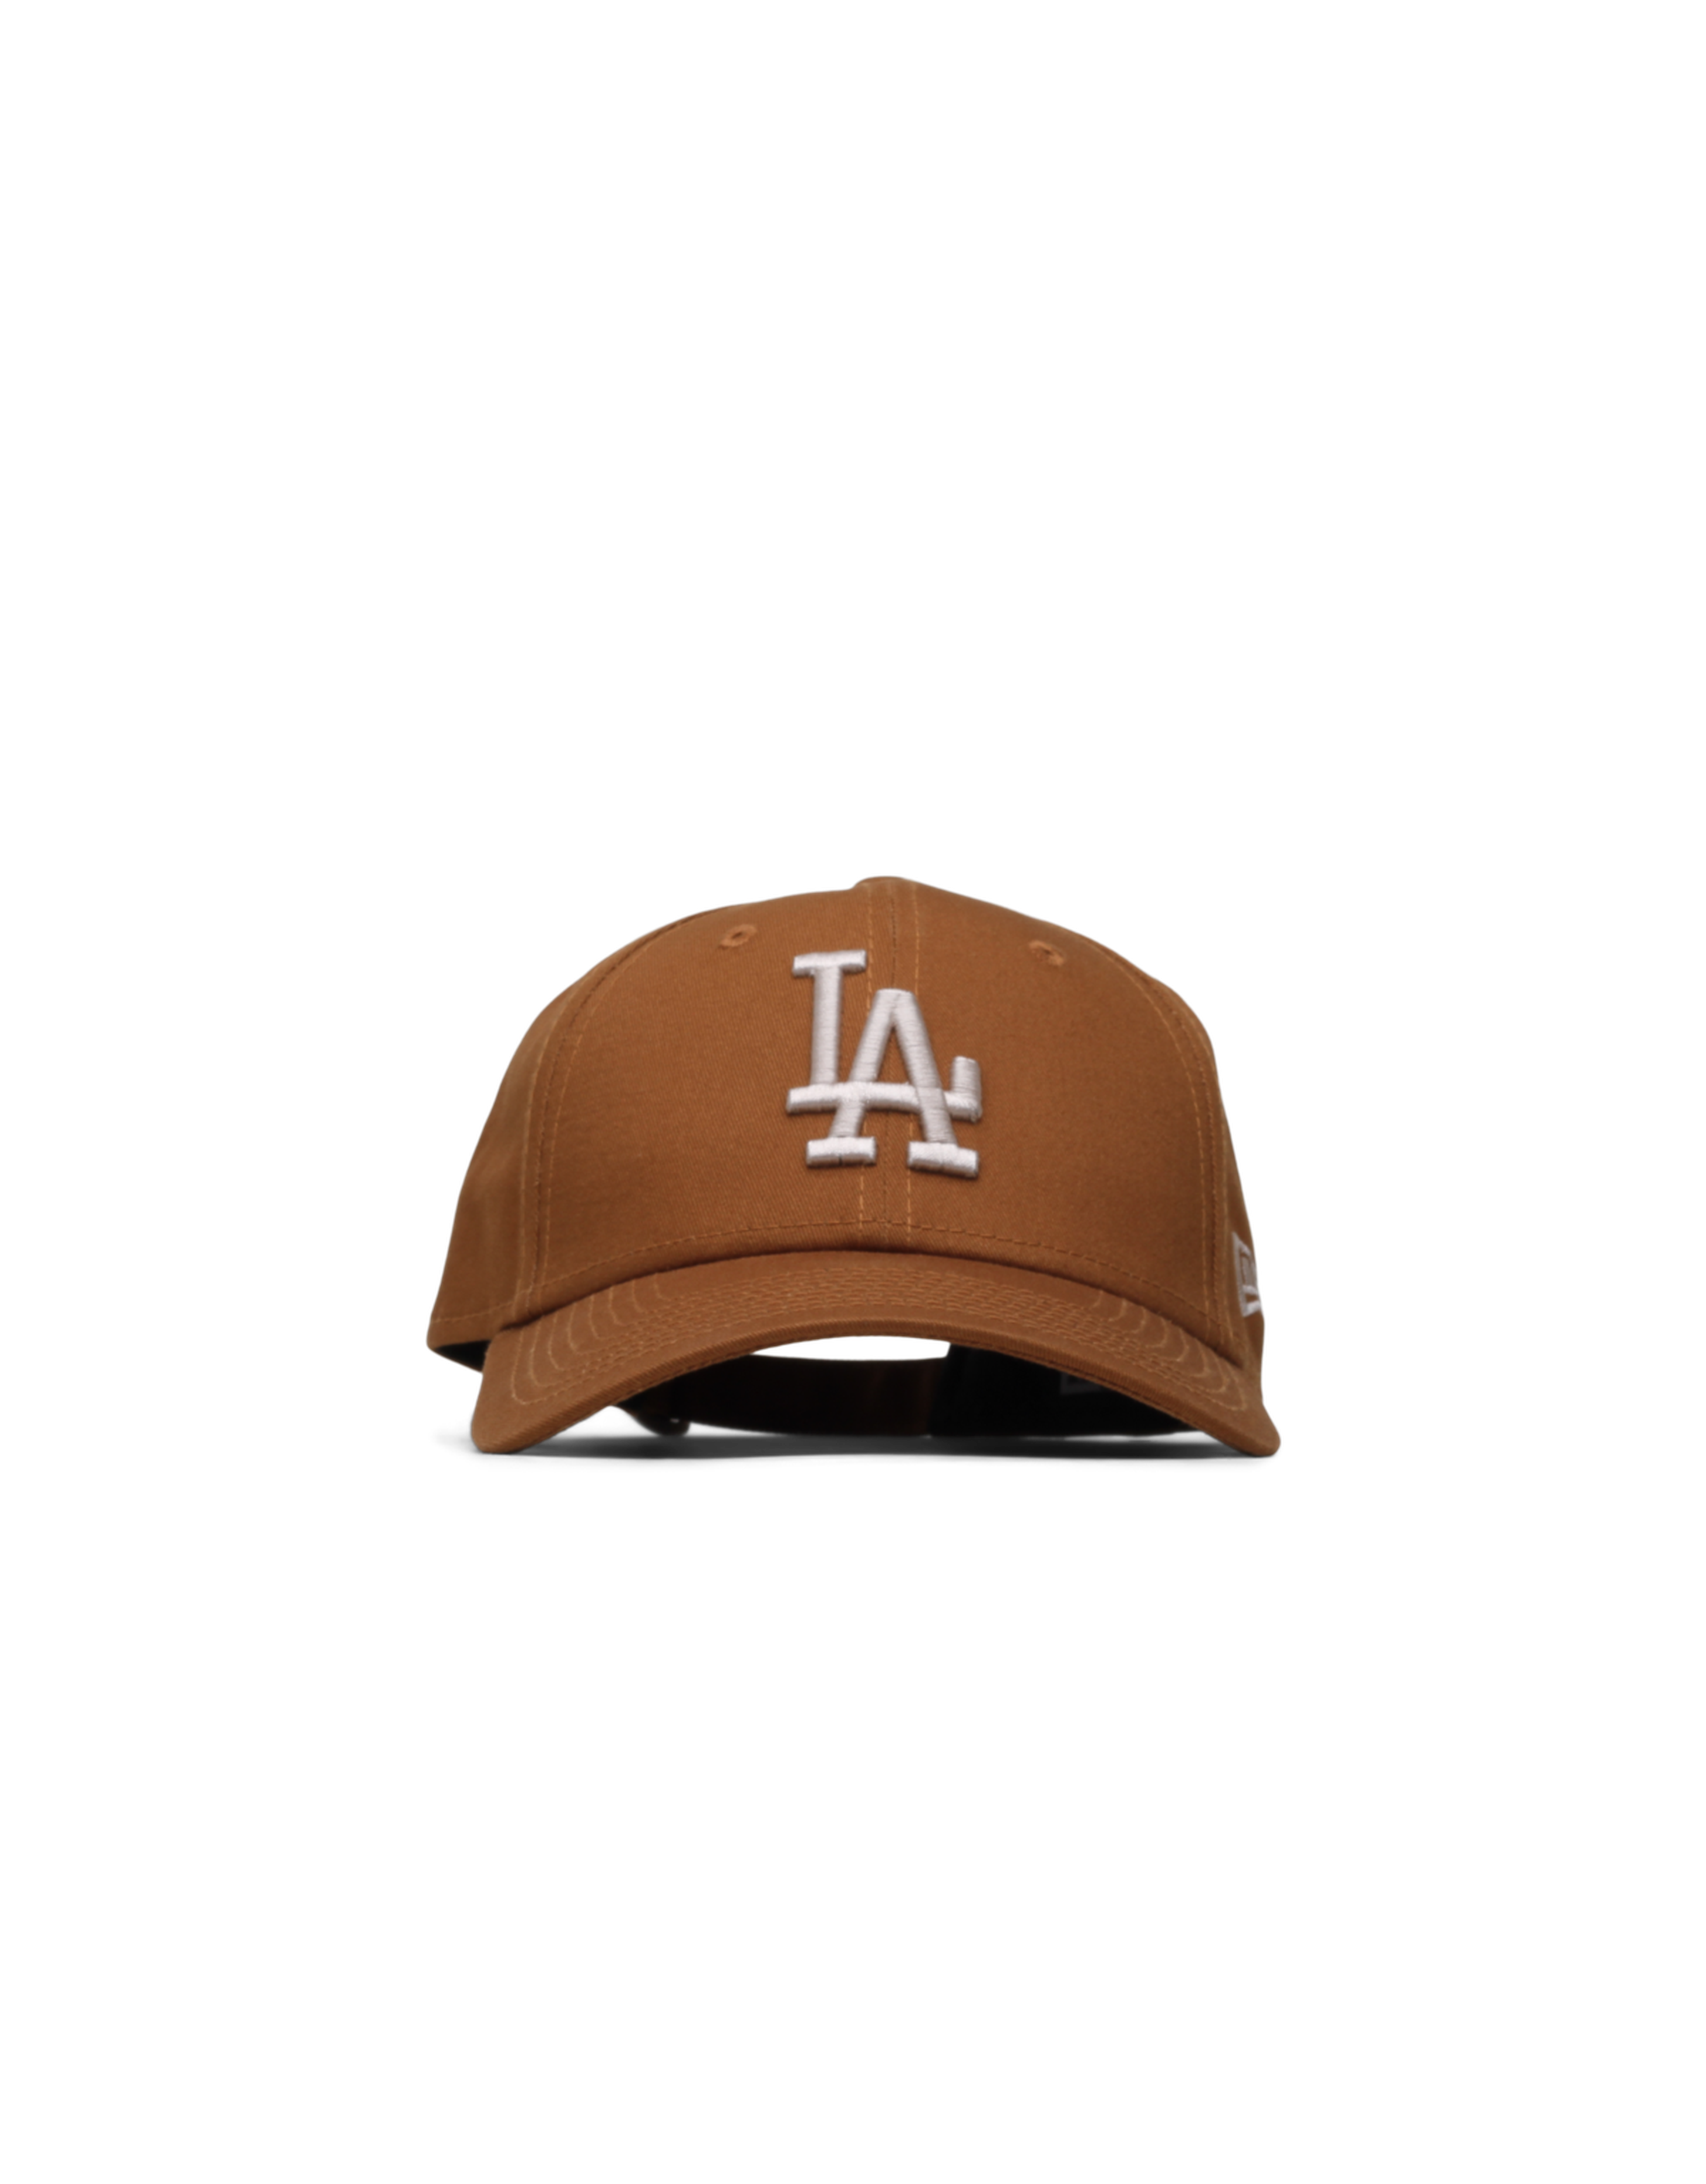 LA Dodgers 9FORTY Adjustable Cap